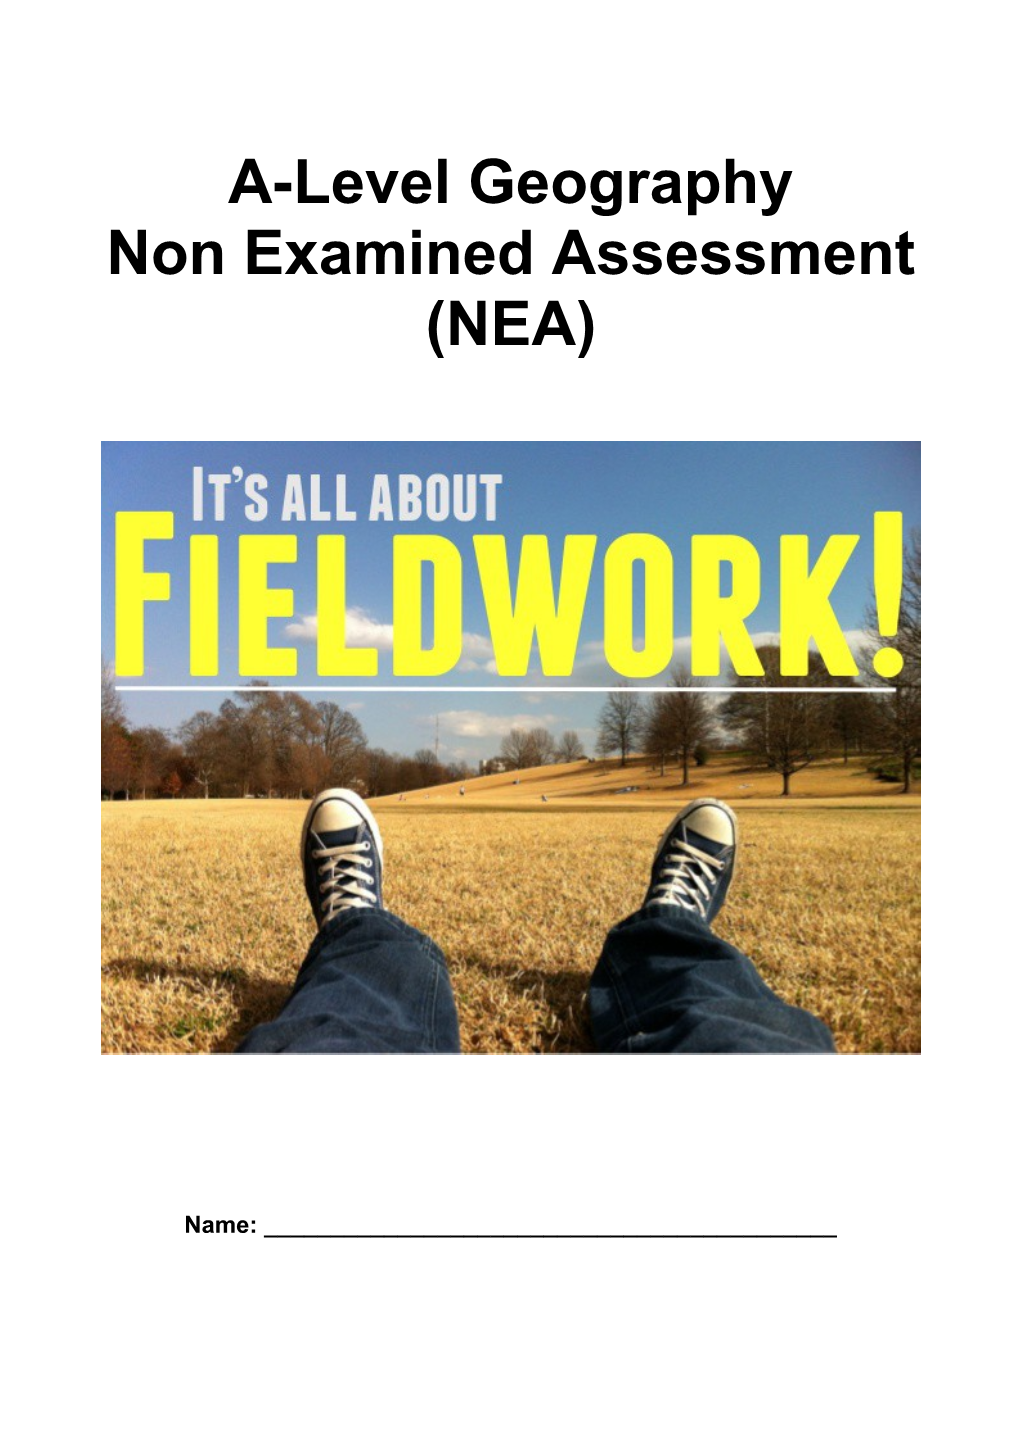 Non Examined Assessment (NEA)